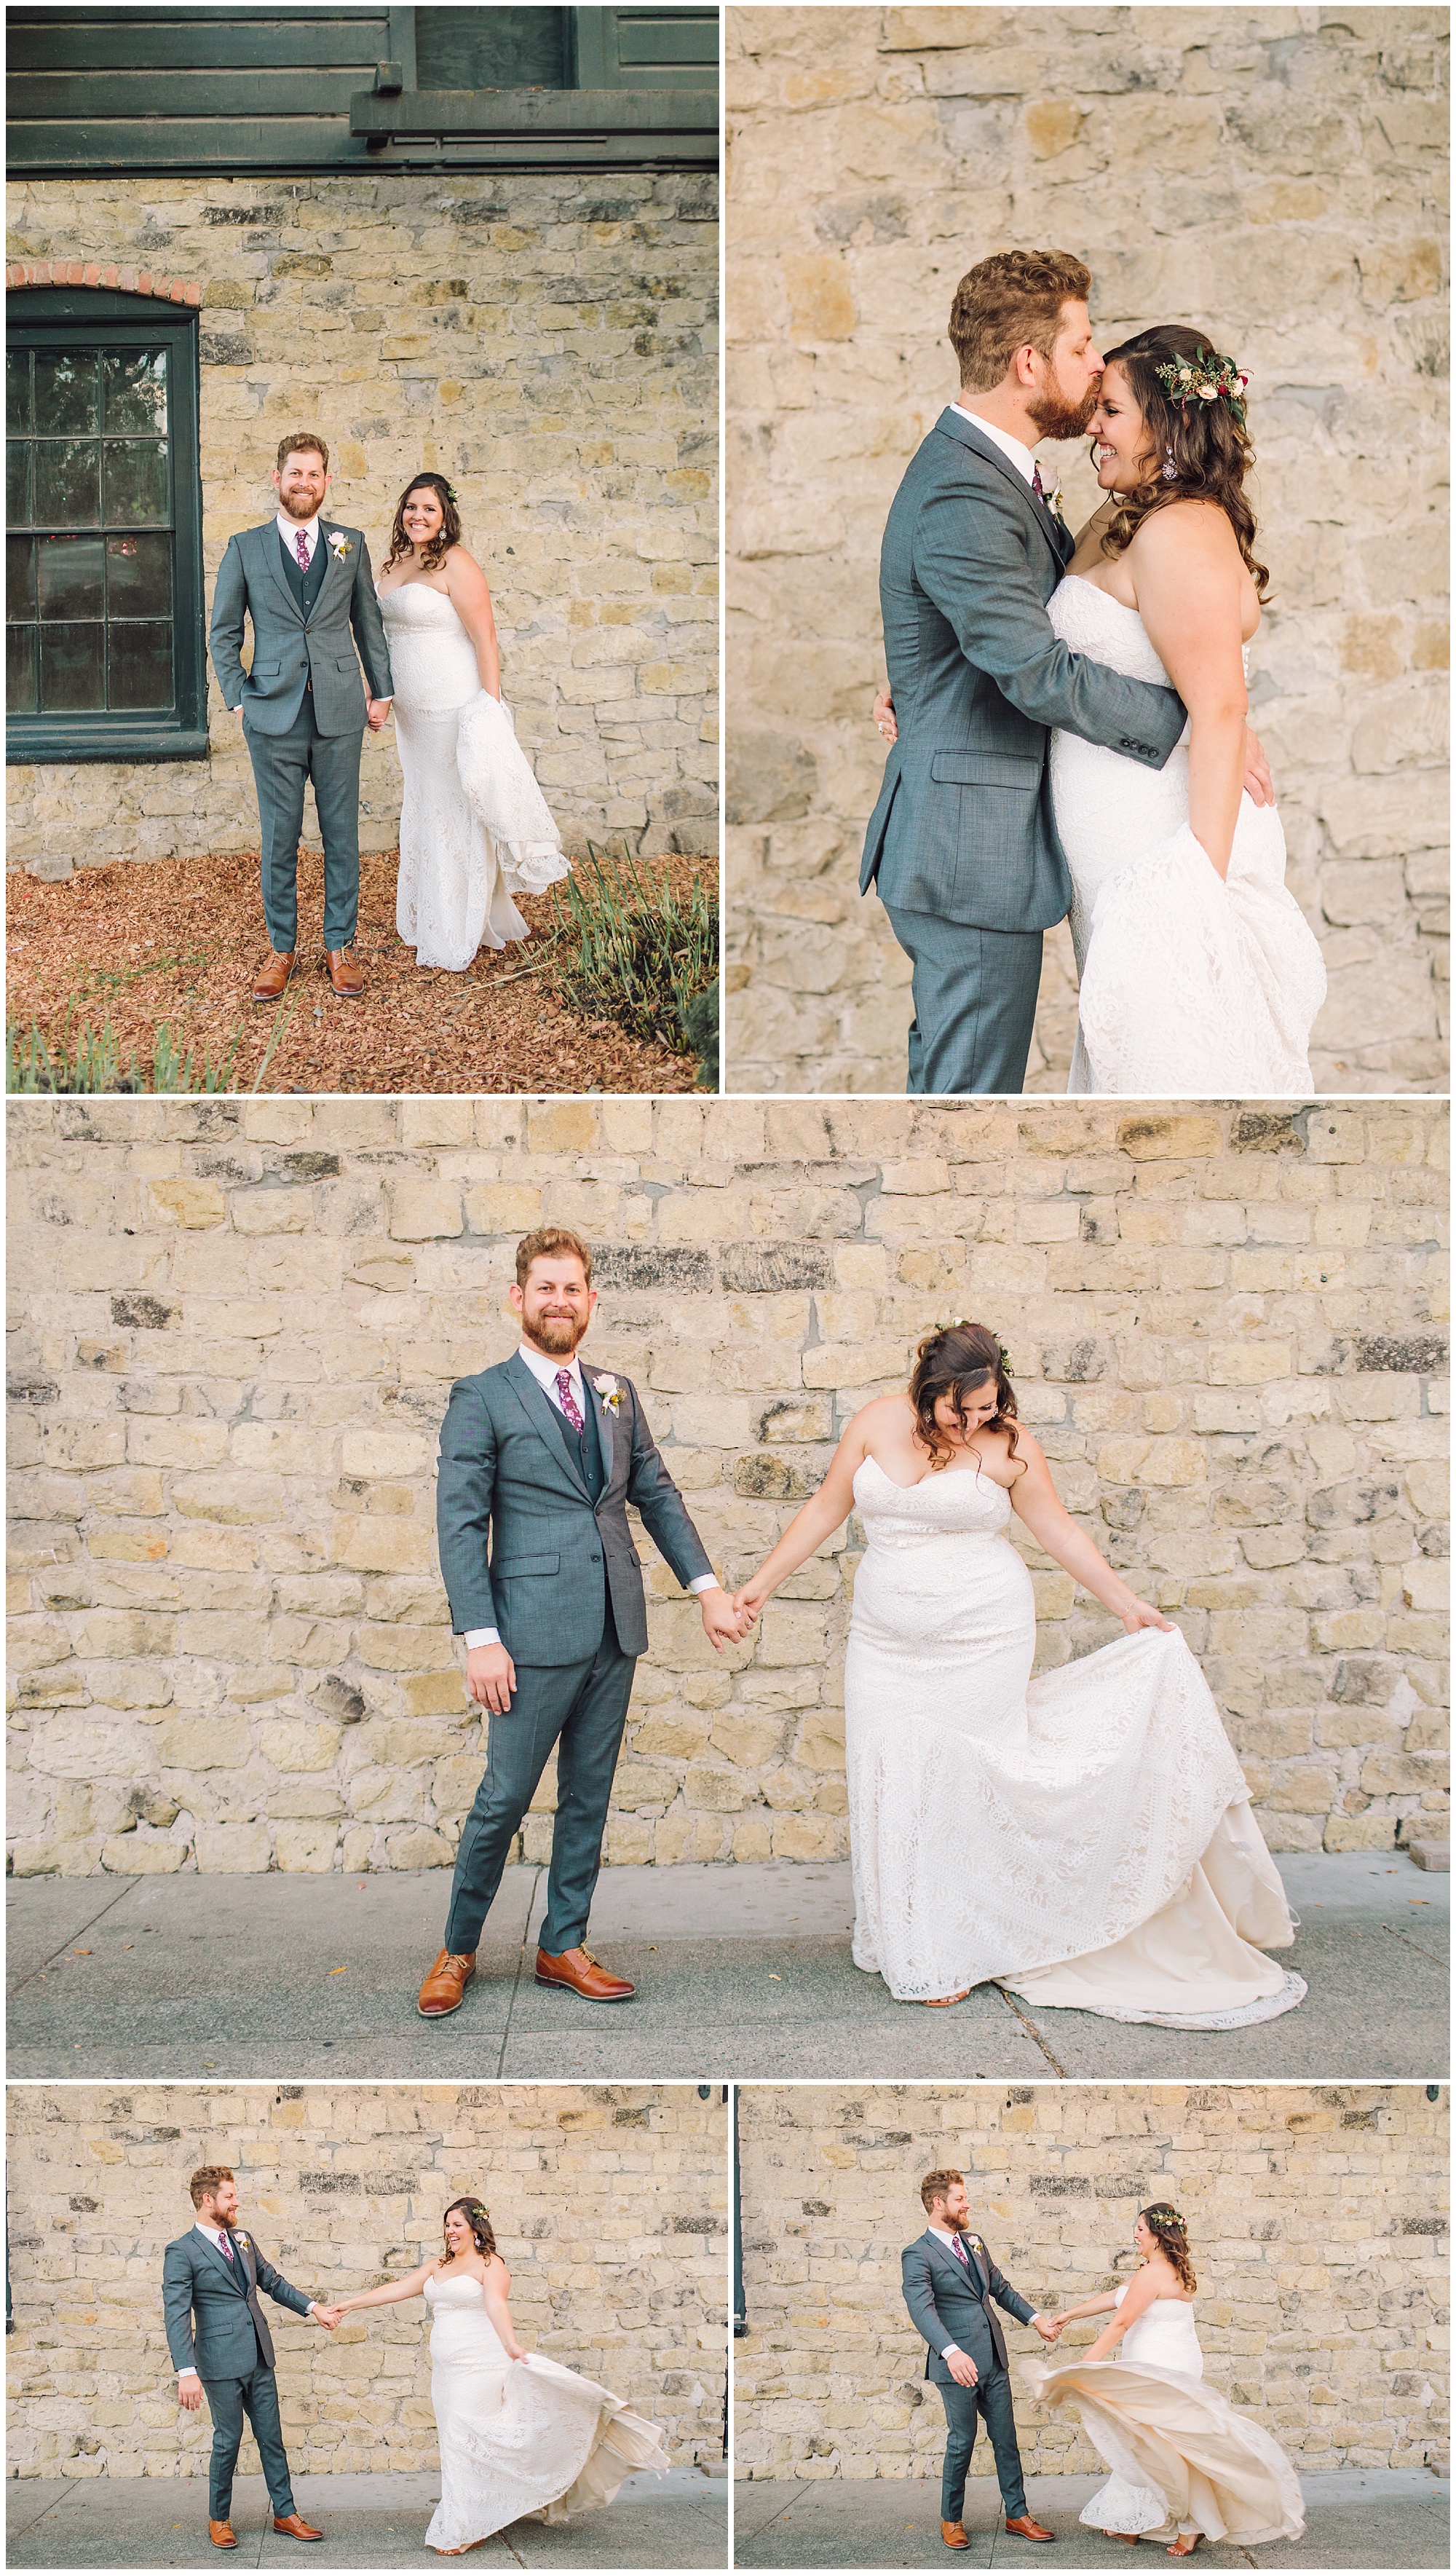 Kelsey + Scott | Hopmonk Sebastopol Wedding